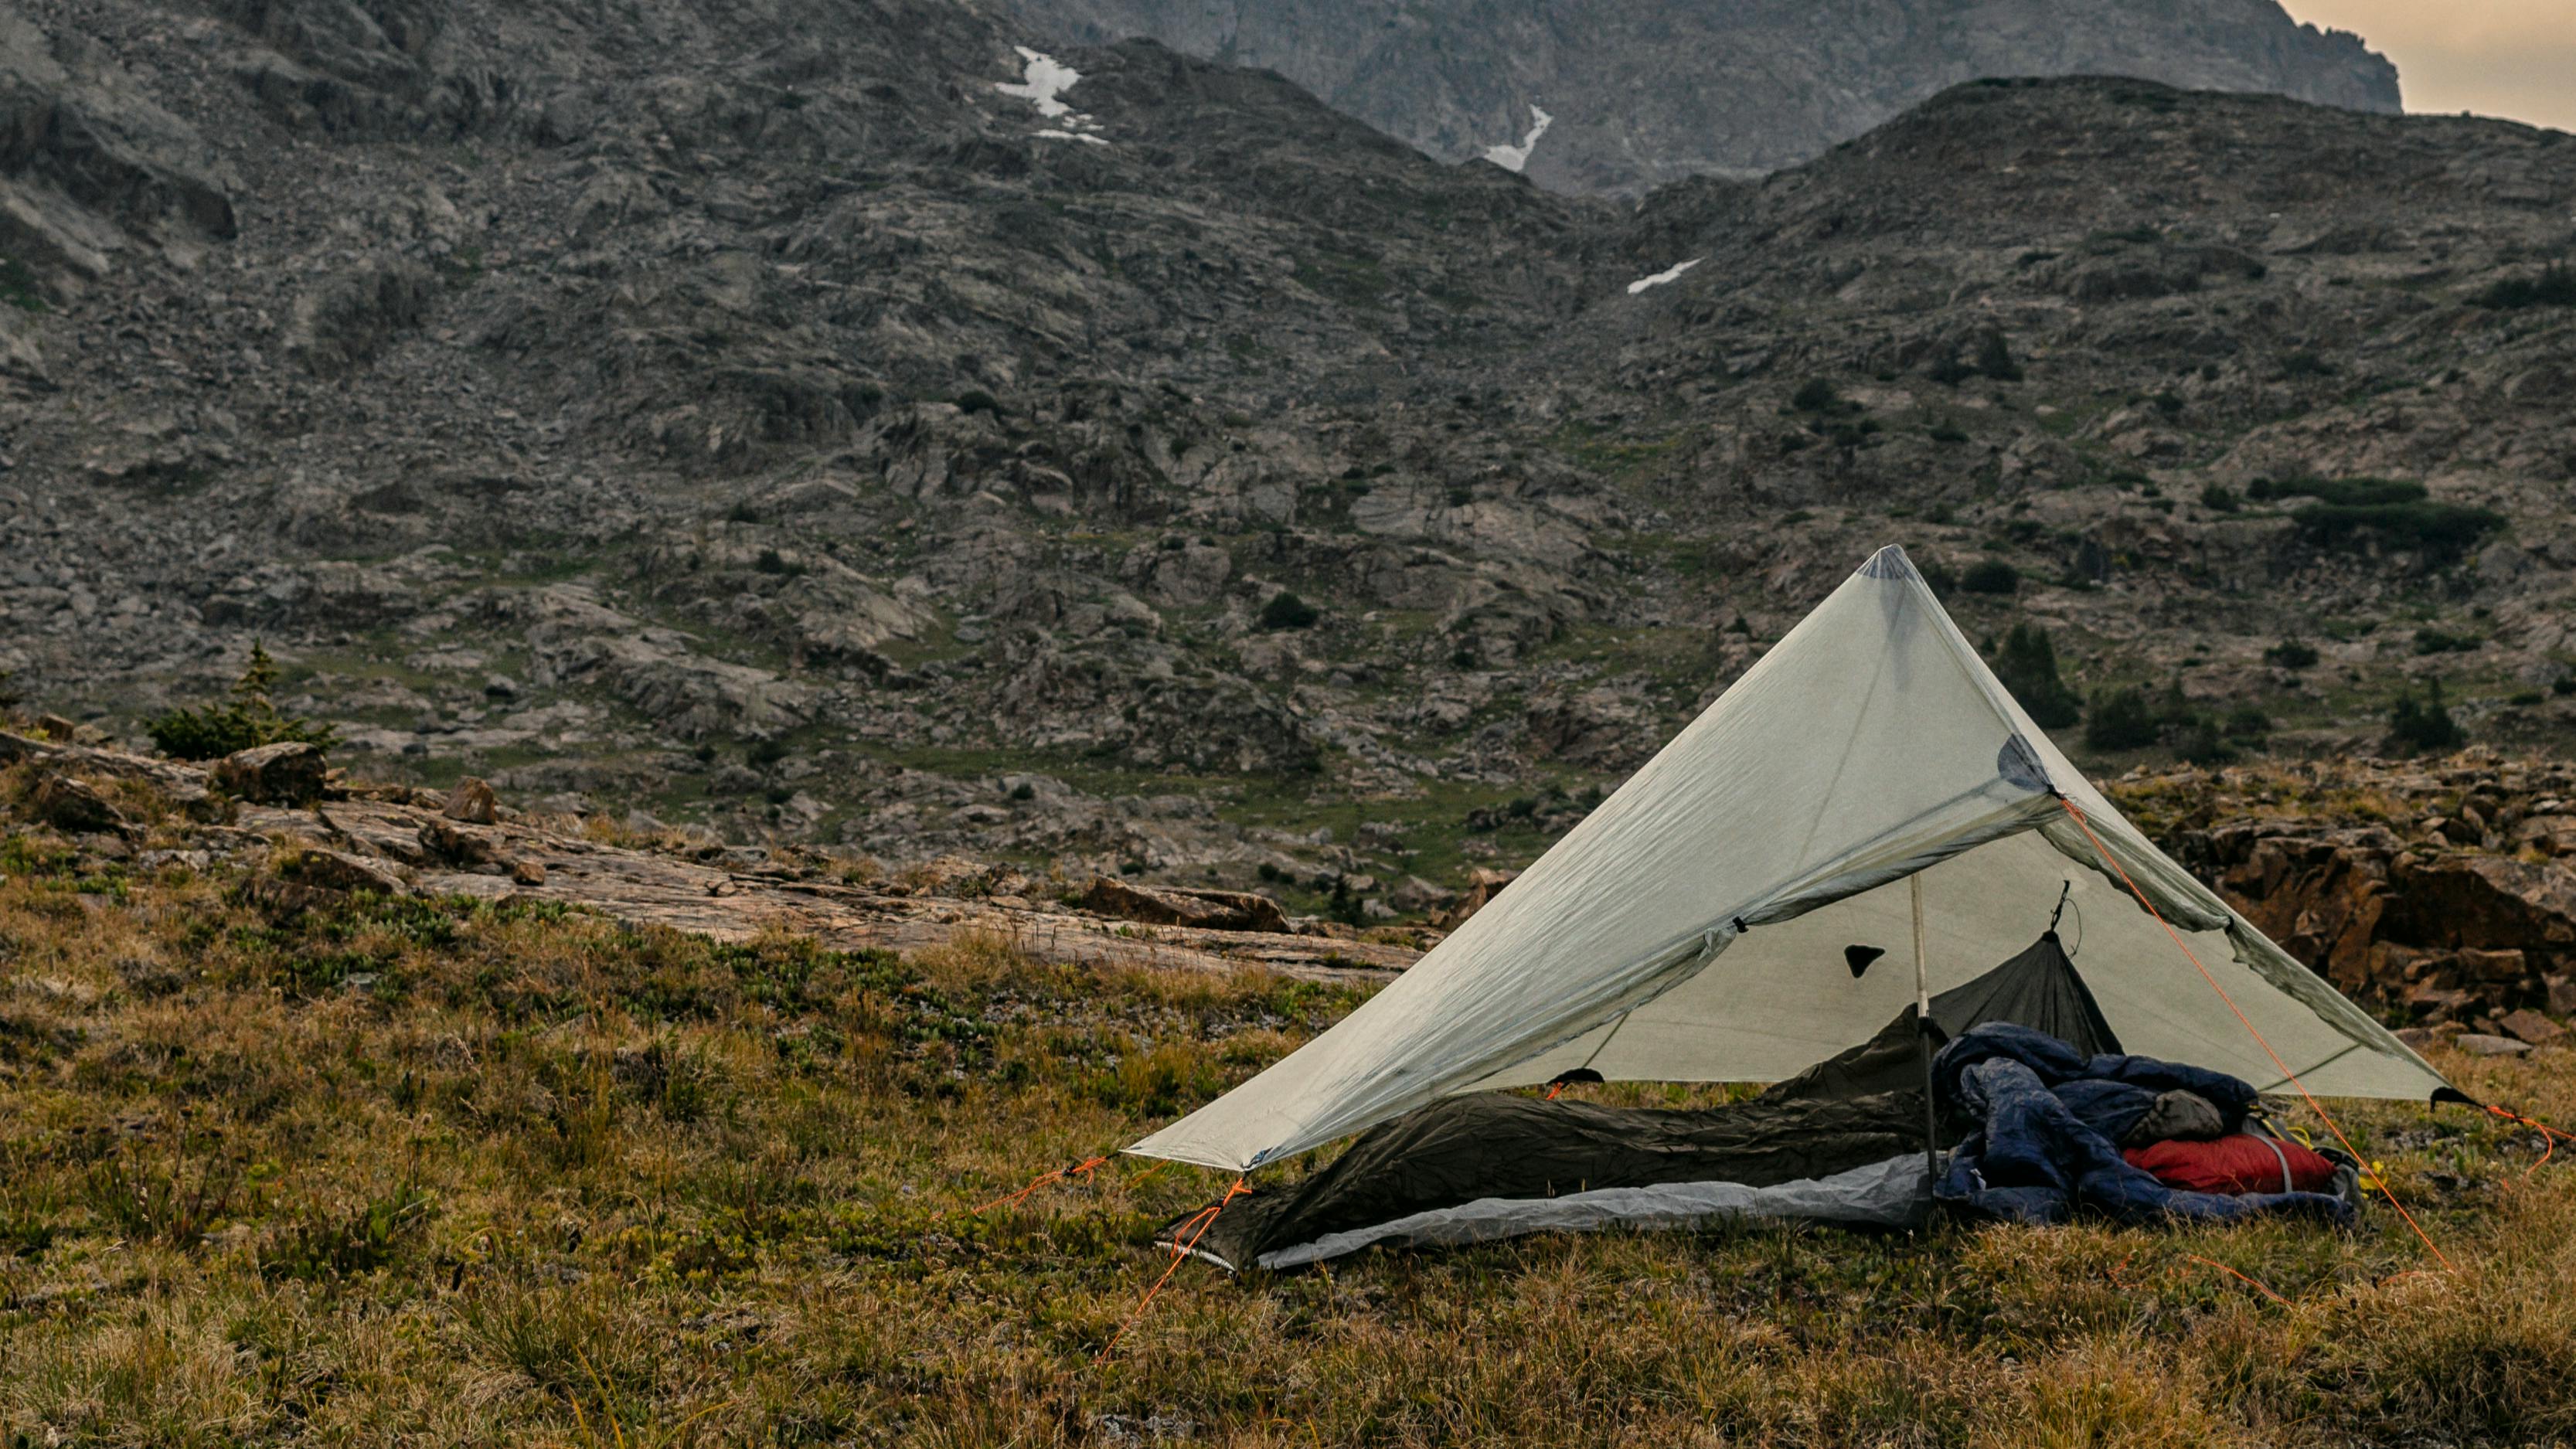 An ultralight tent set up in a rocky field.